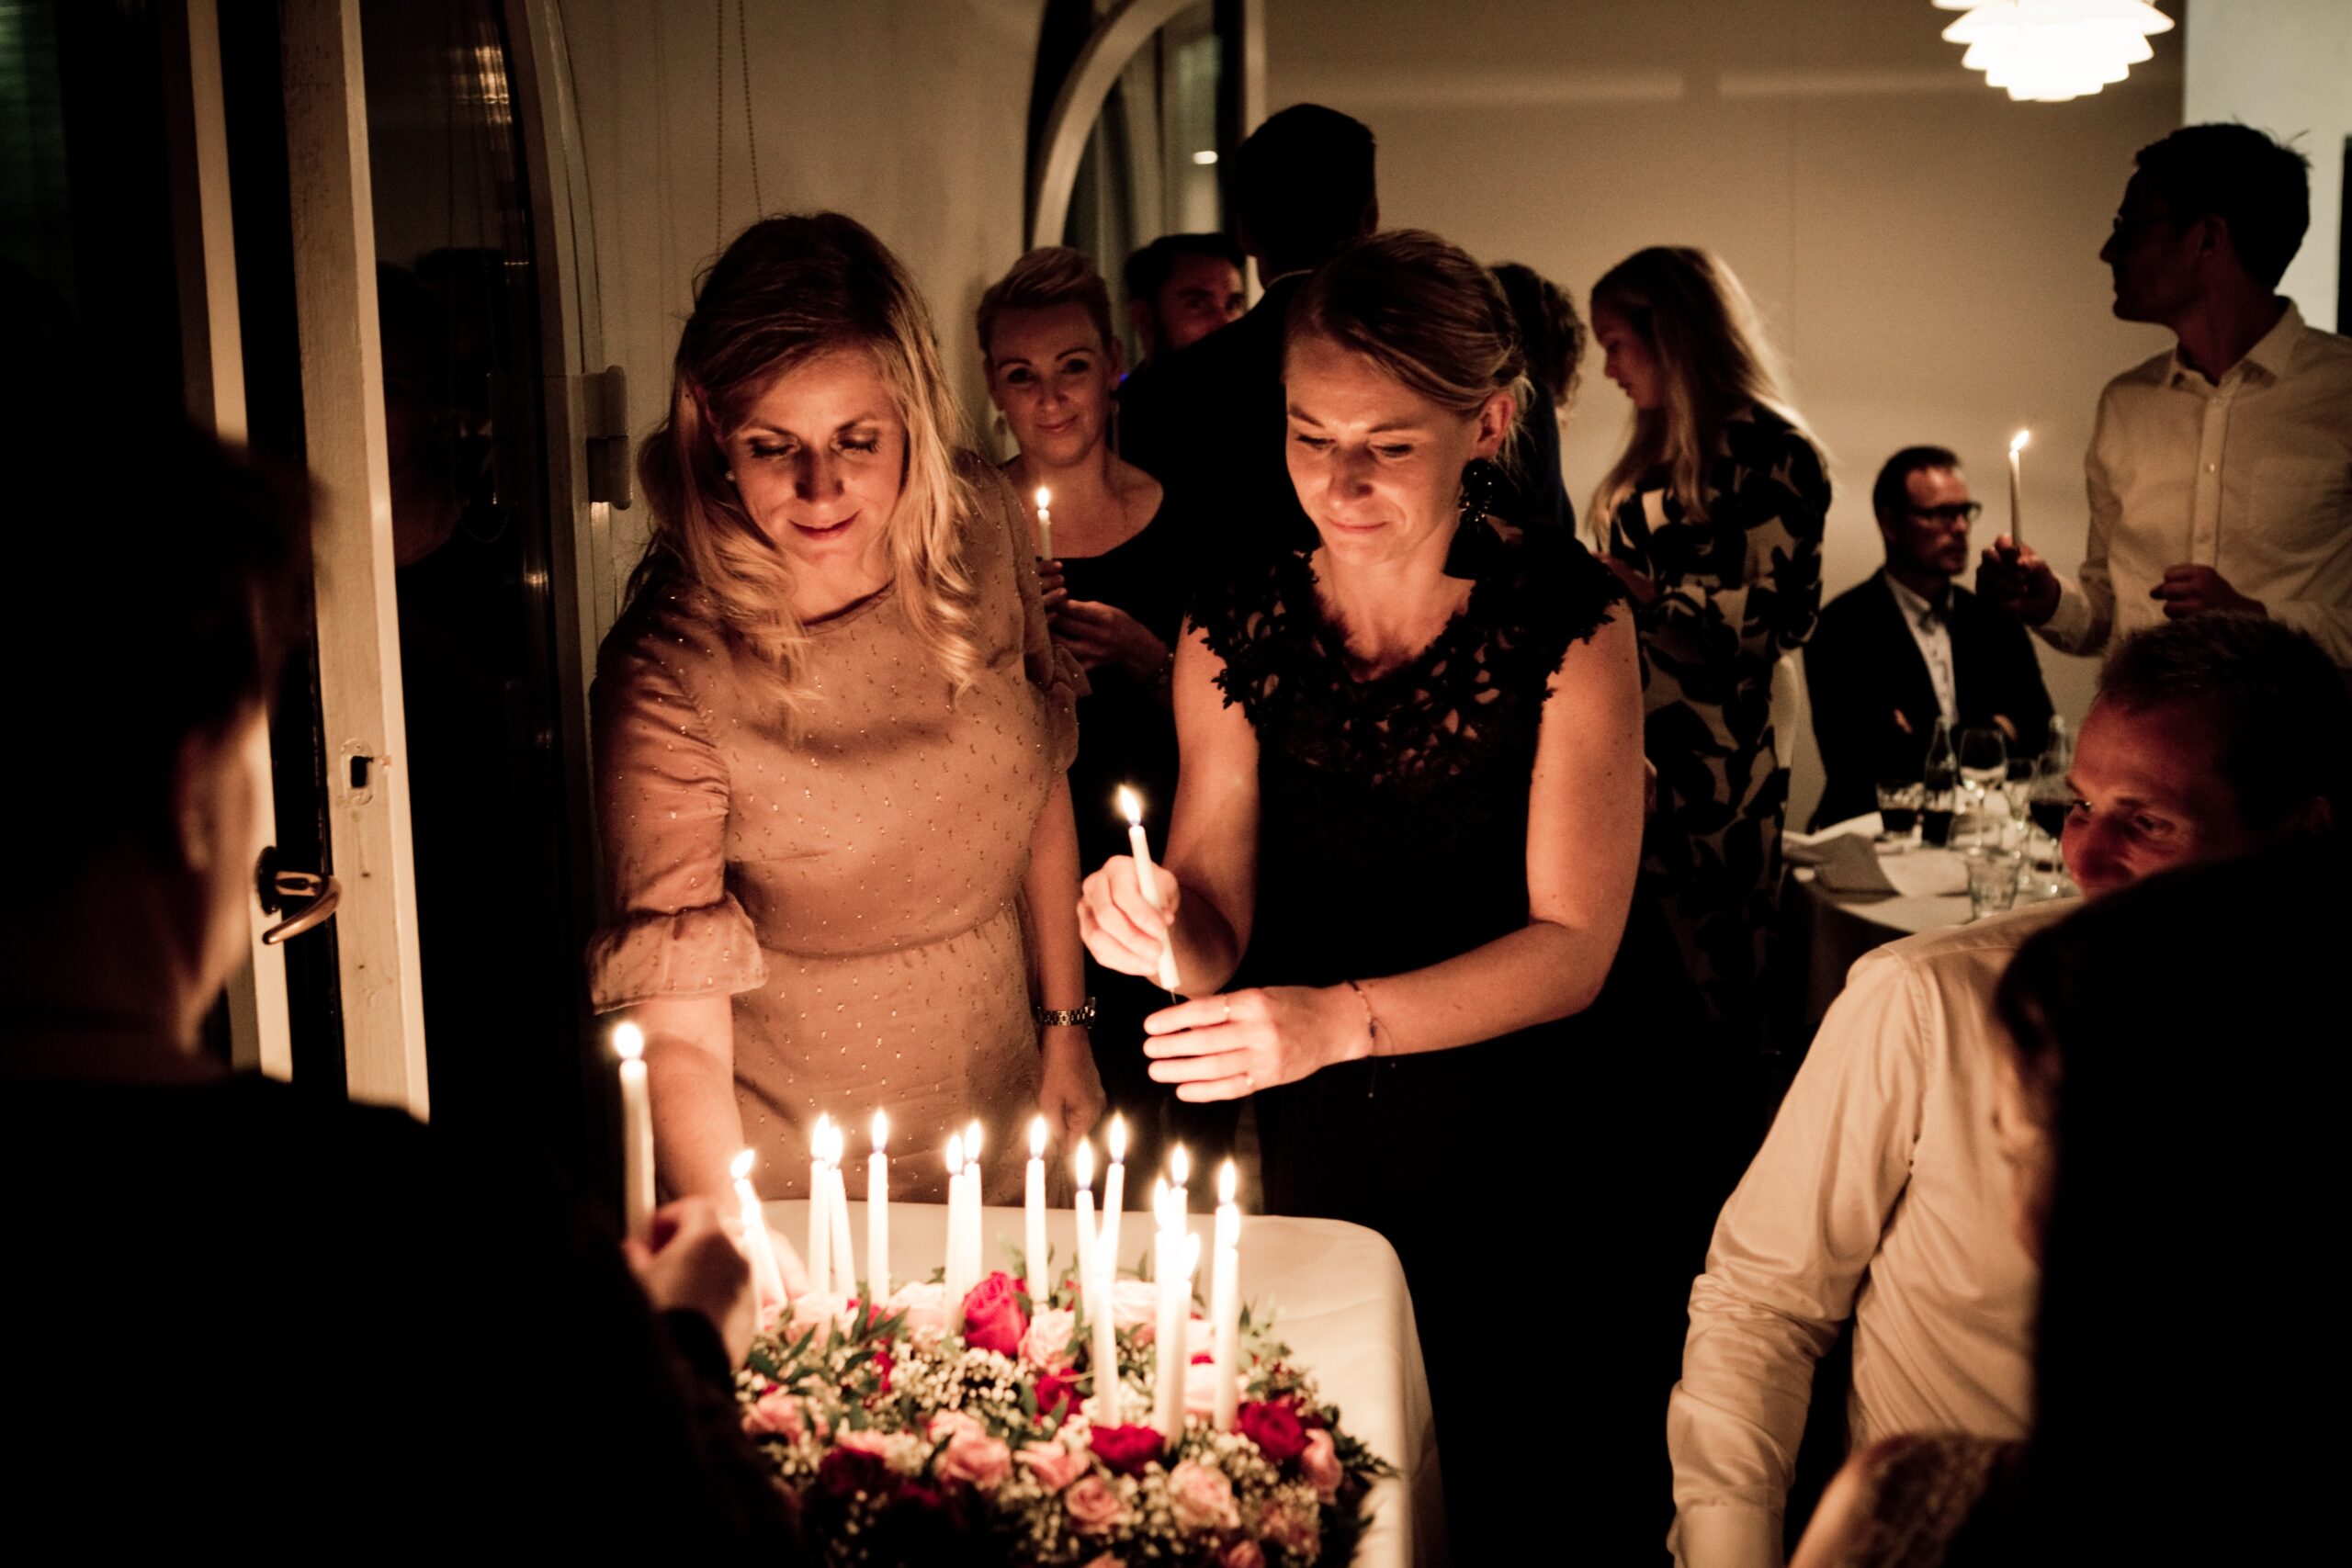 Two women light a birthday cake at a dimly lit celebration.